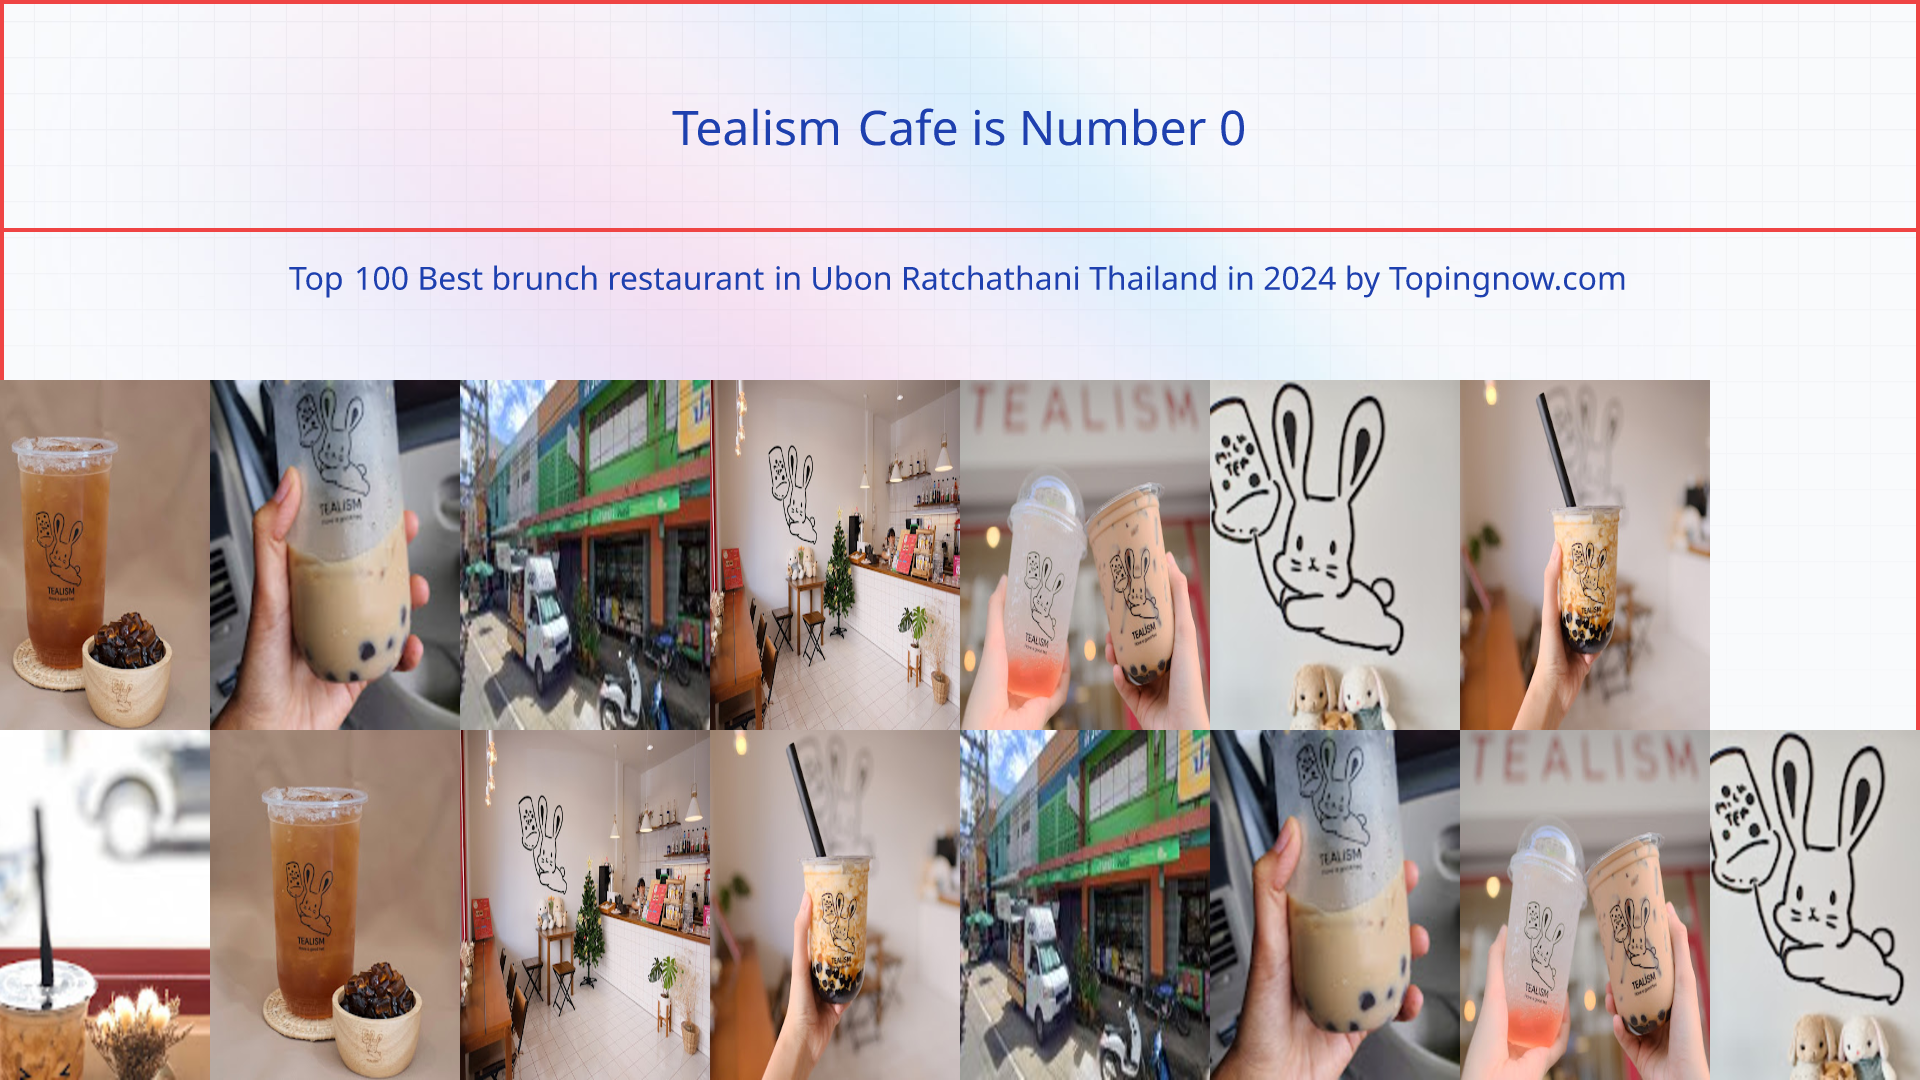 Tealism Cafe: Top 100 Best brunch restaurant in Ubon Ratchathani Thailand in 2024